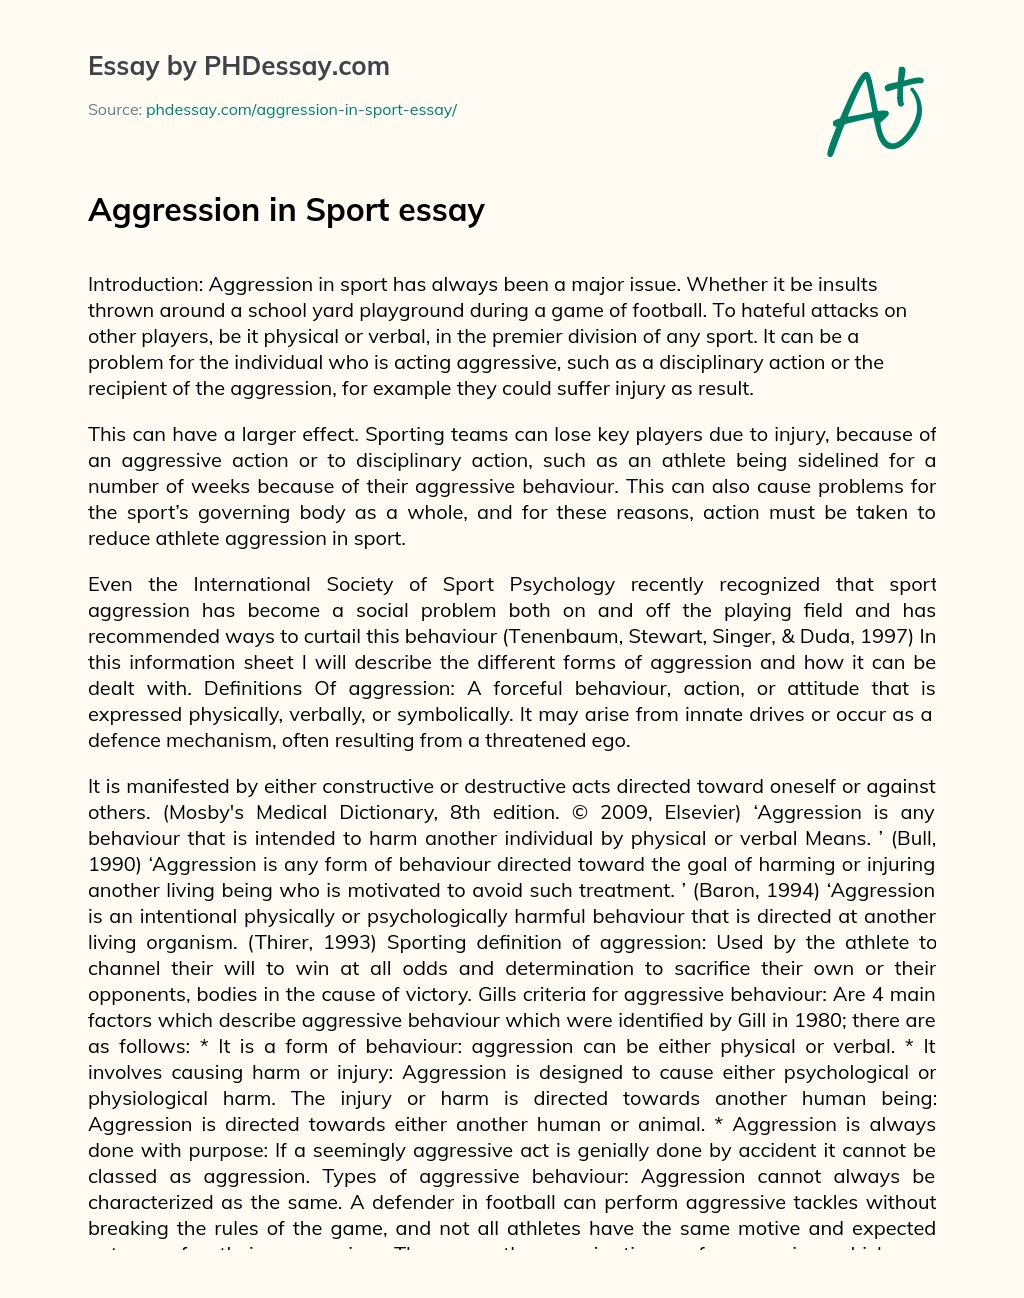 Aggression in Sport essay essay